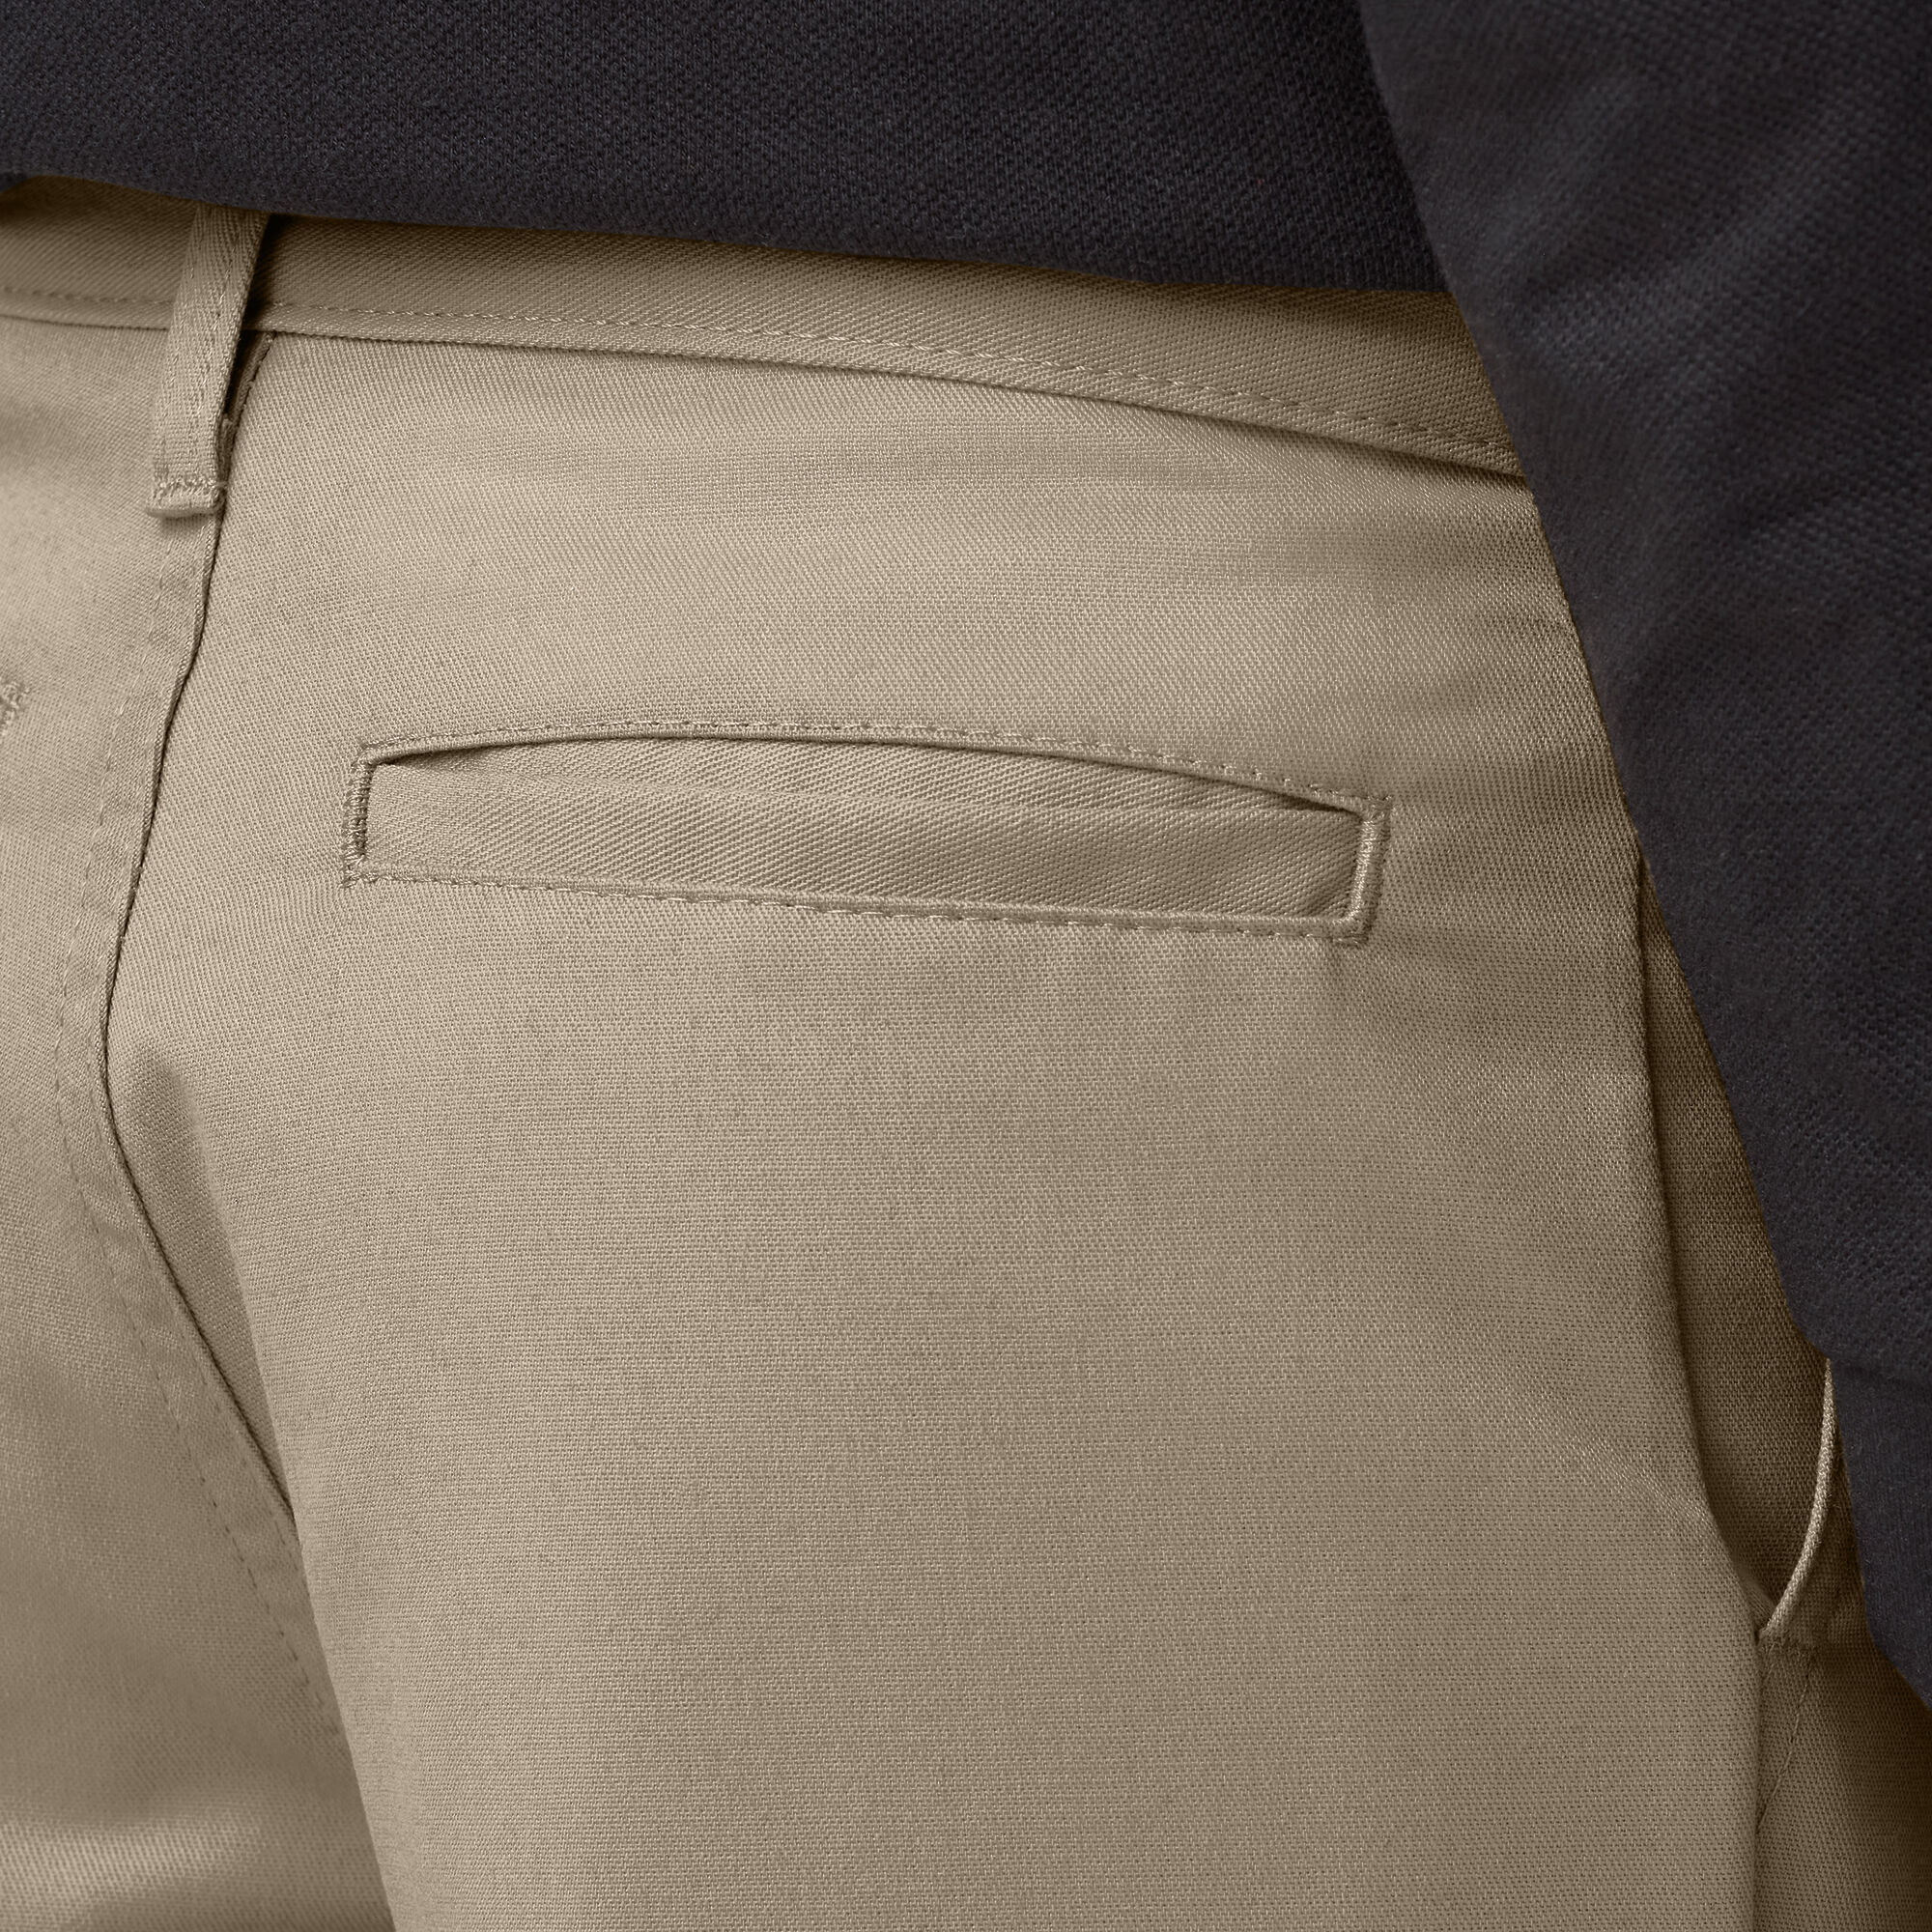 Haggar H26 Men's Premium Stretch Classic Fit Dress Pants - Khaki 36x32